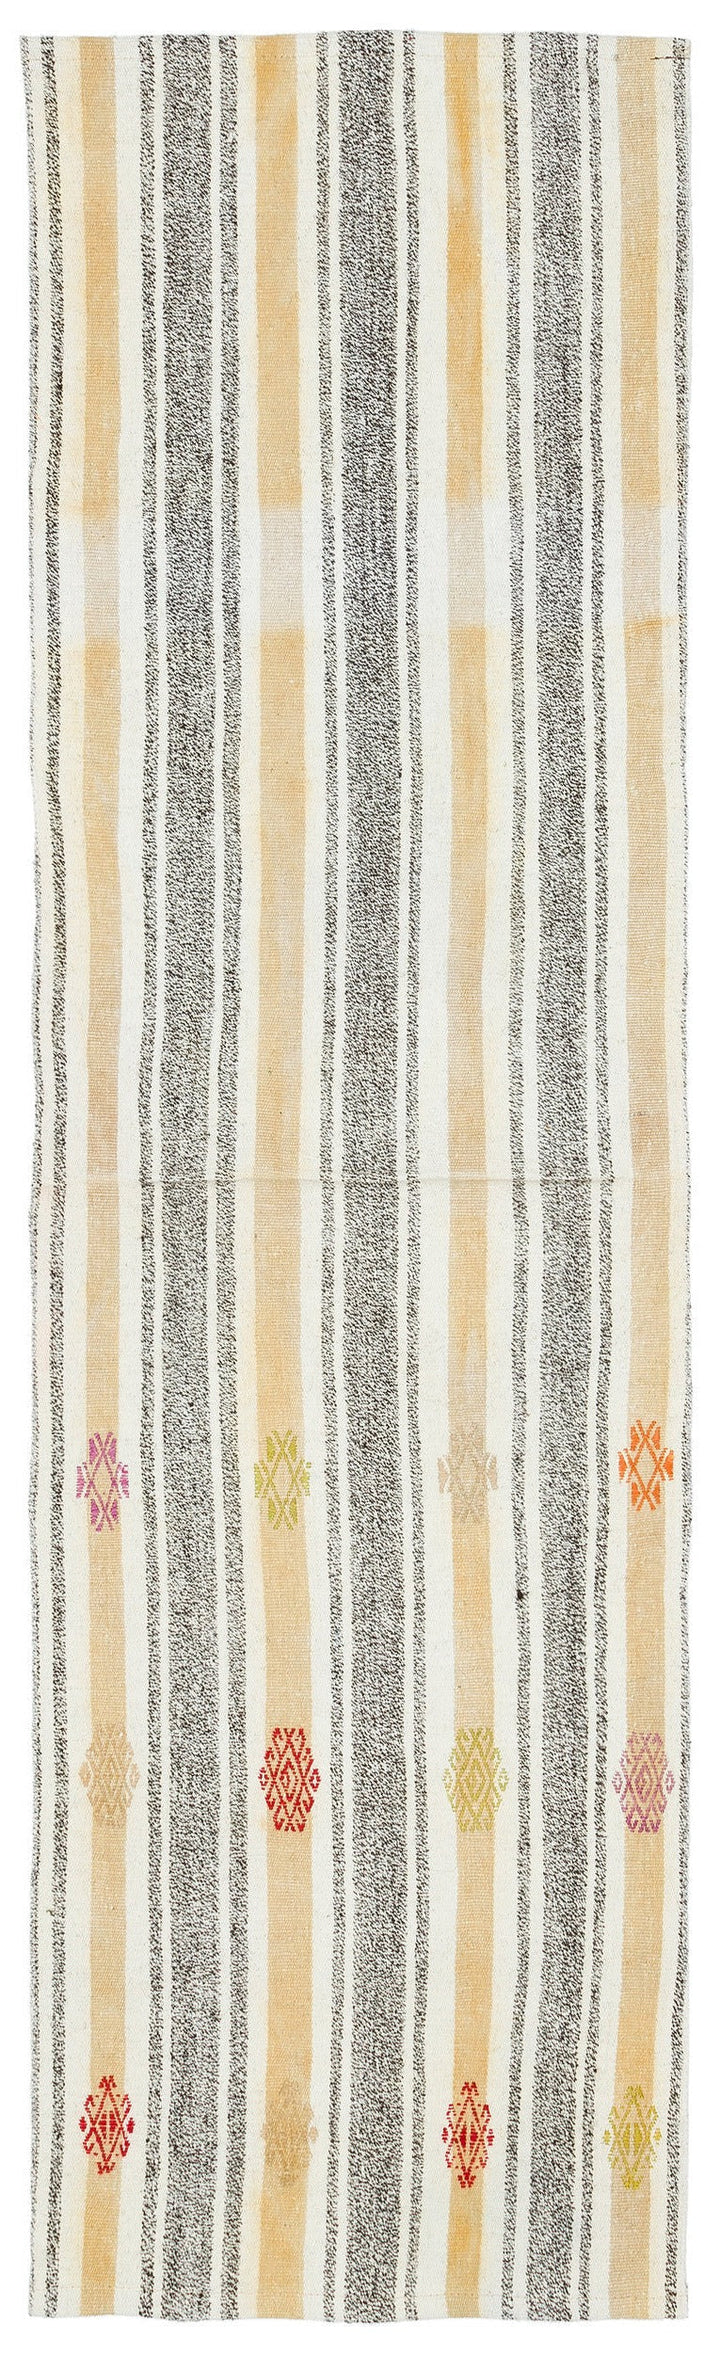 Cretan Beige Striped Wool Hand-Woven Carpet 068 x 235